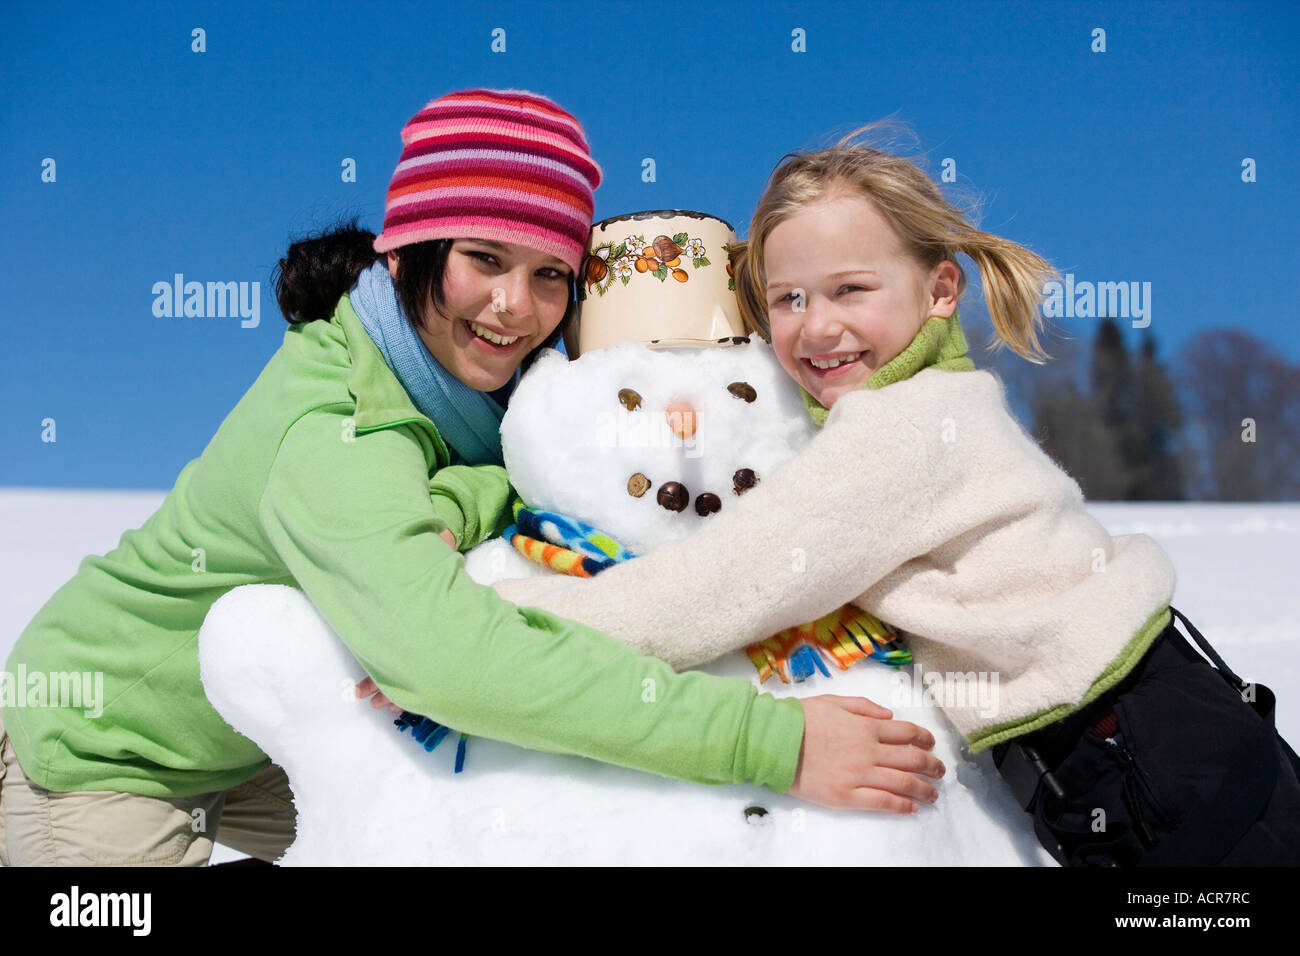 Austria, girls (6-17) hugging snowman, smiling, portrait Stock Photo